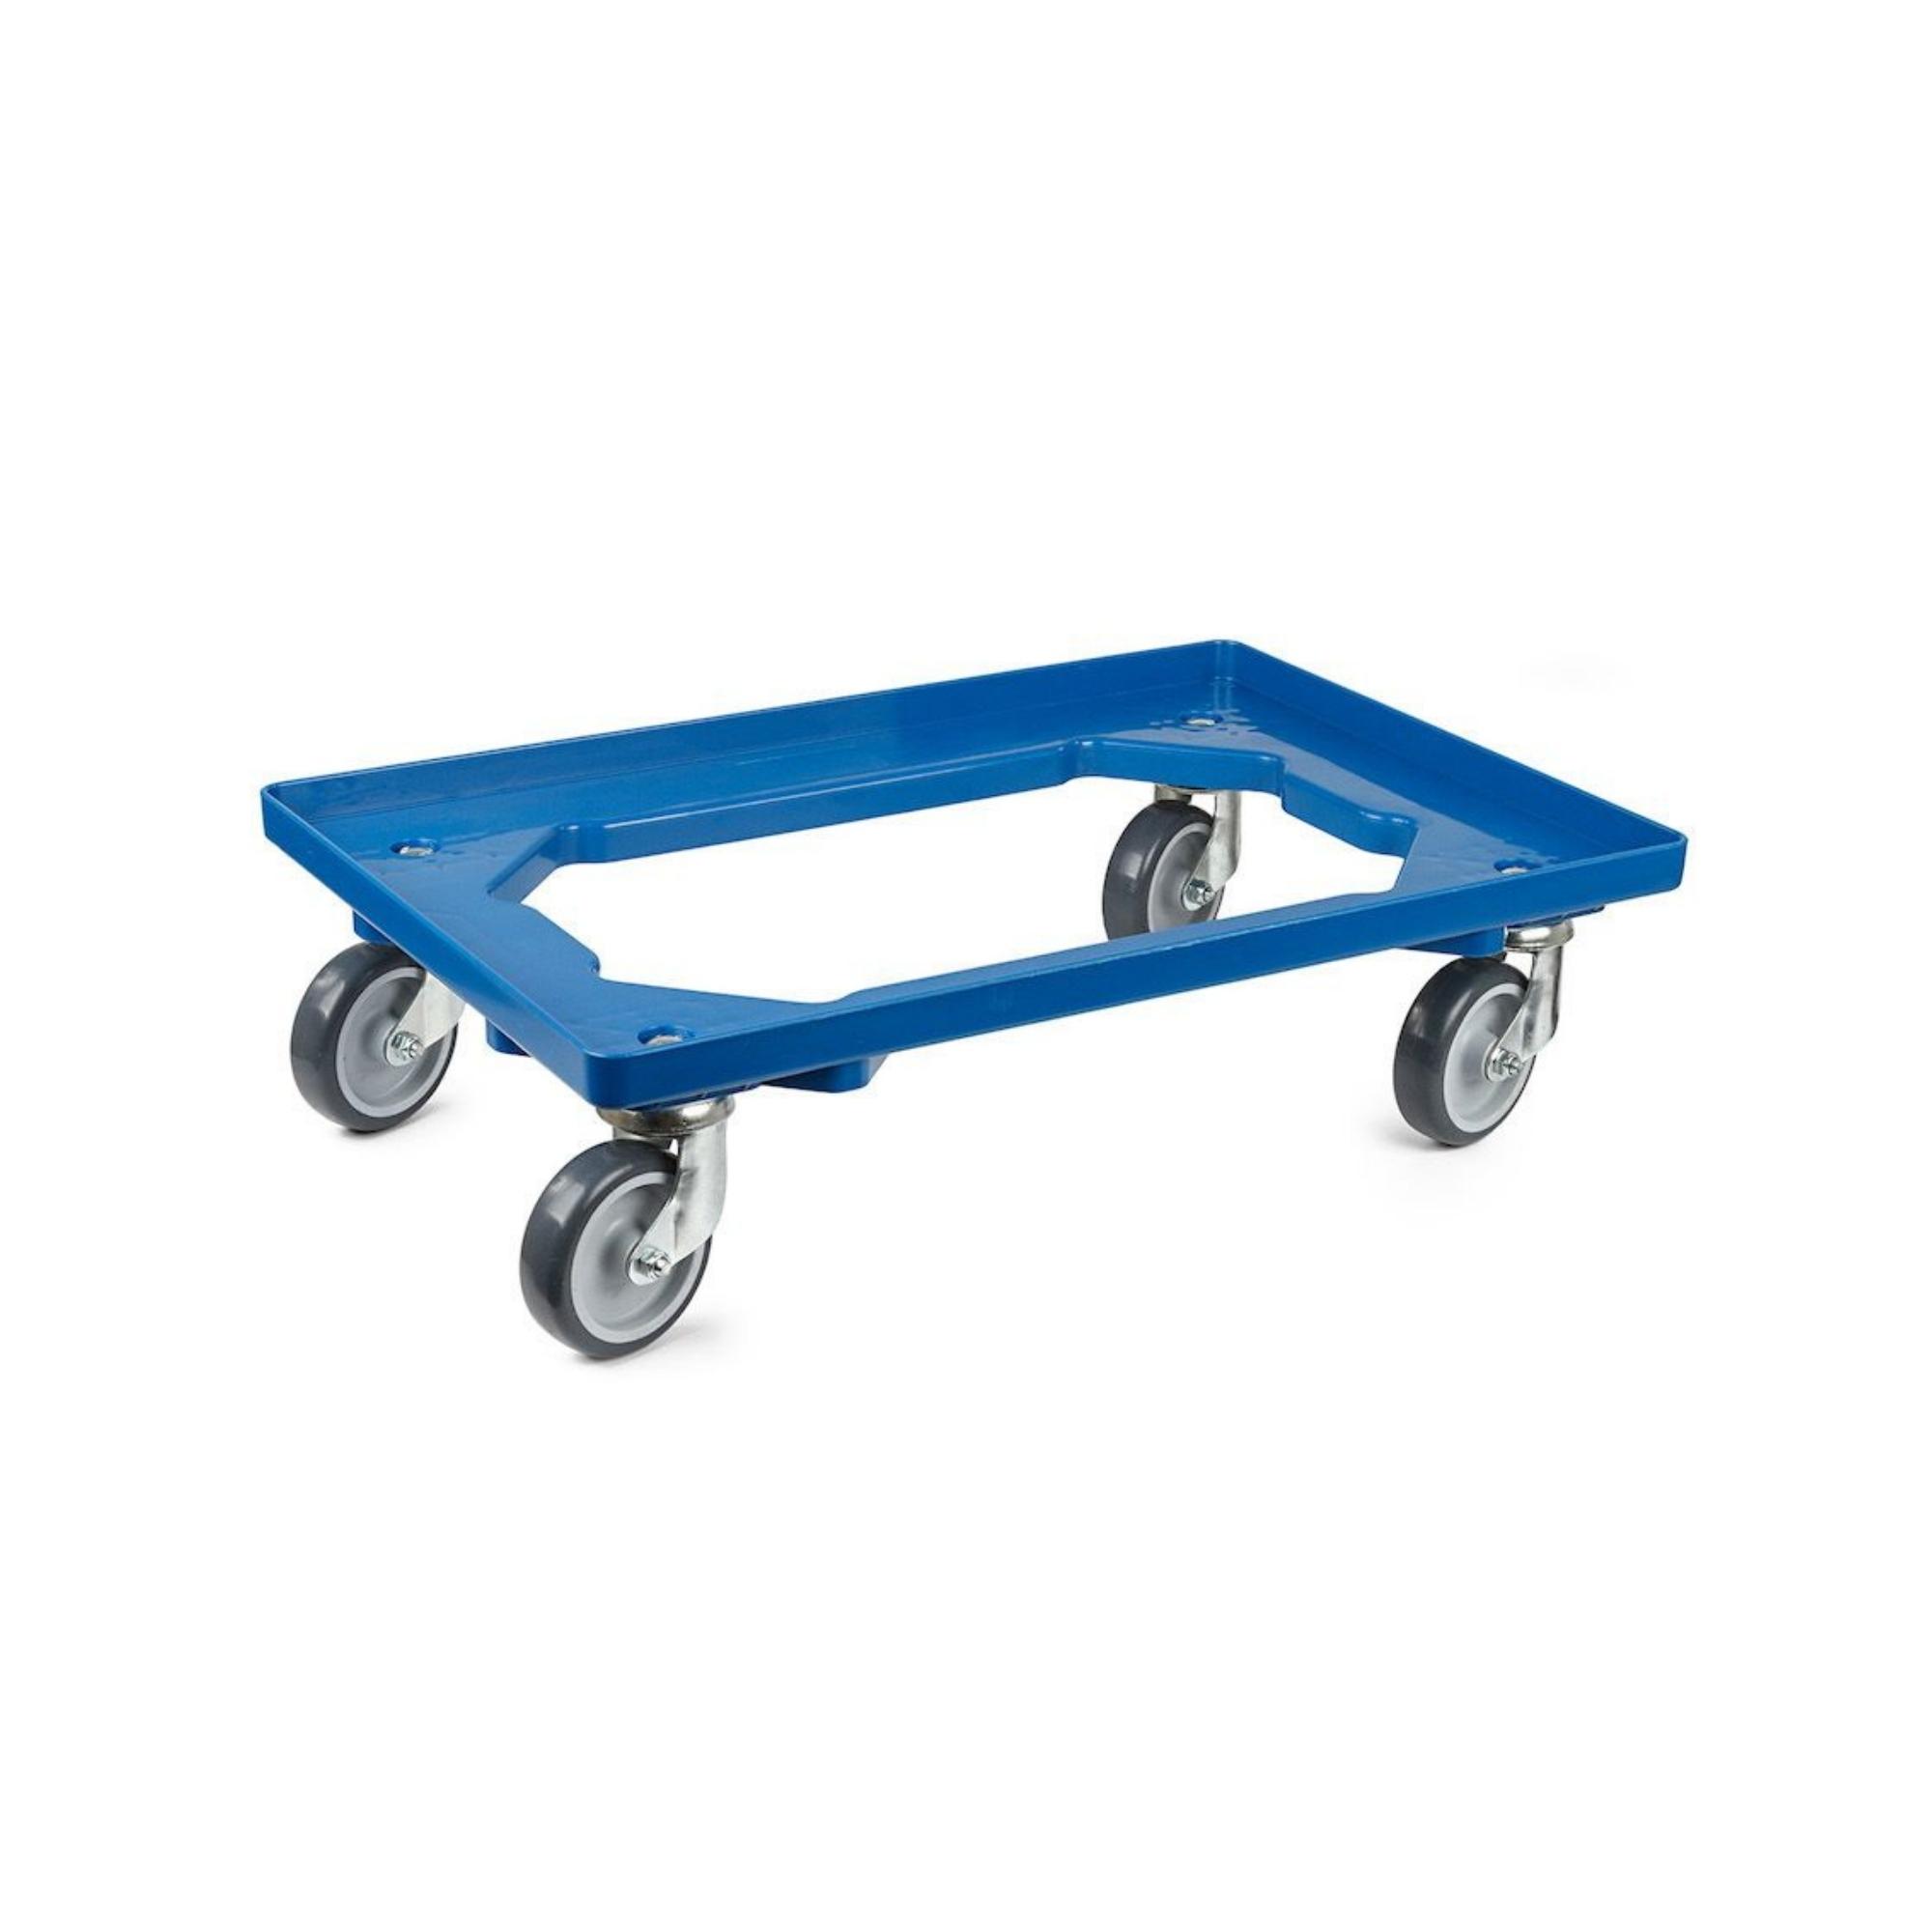 SparSet 2x Transportroller für Euroboxen 60x40cm mit Gummiräder blau | Offenes Deck | 4 Lenkrollen | Traglast 300kg | Kistenroller Logistikroller Rollwagen Profi-Fahrgestell